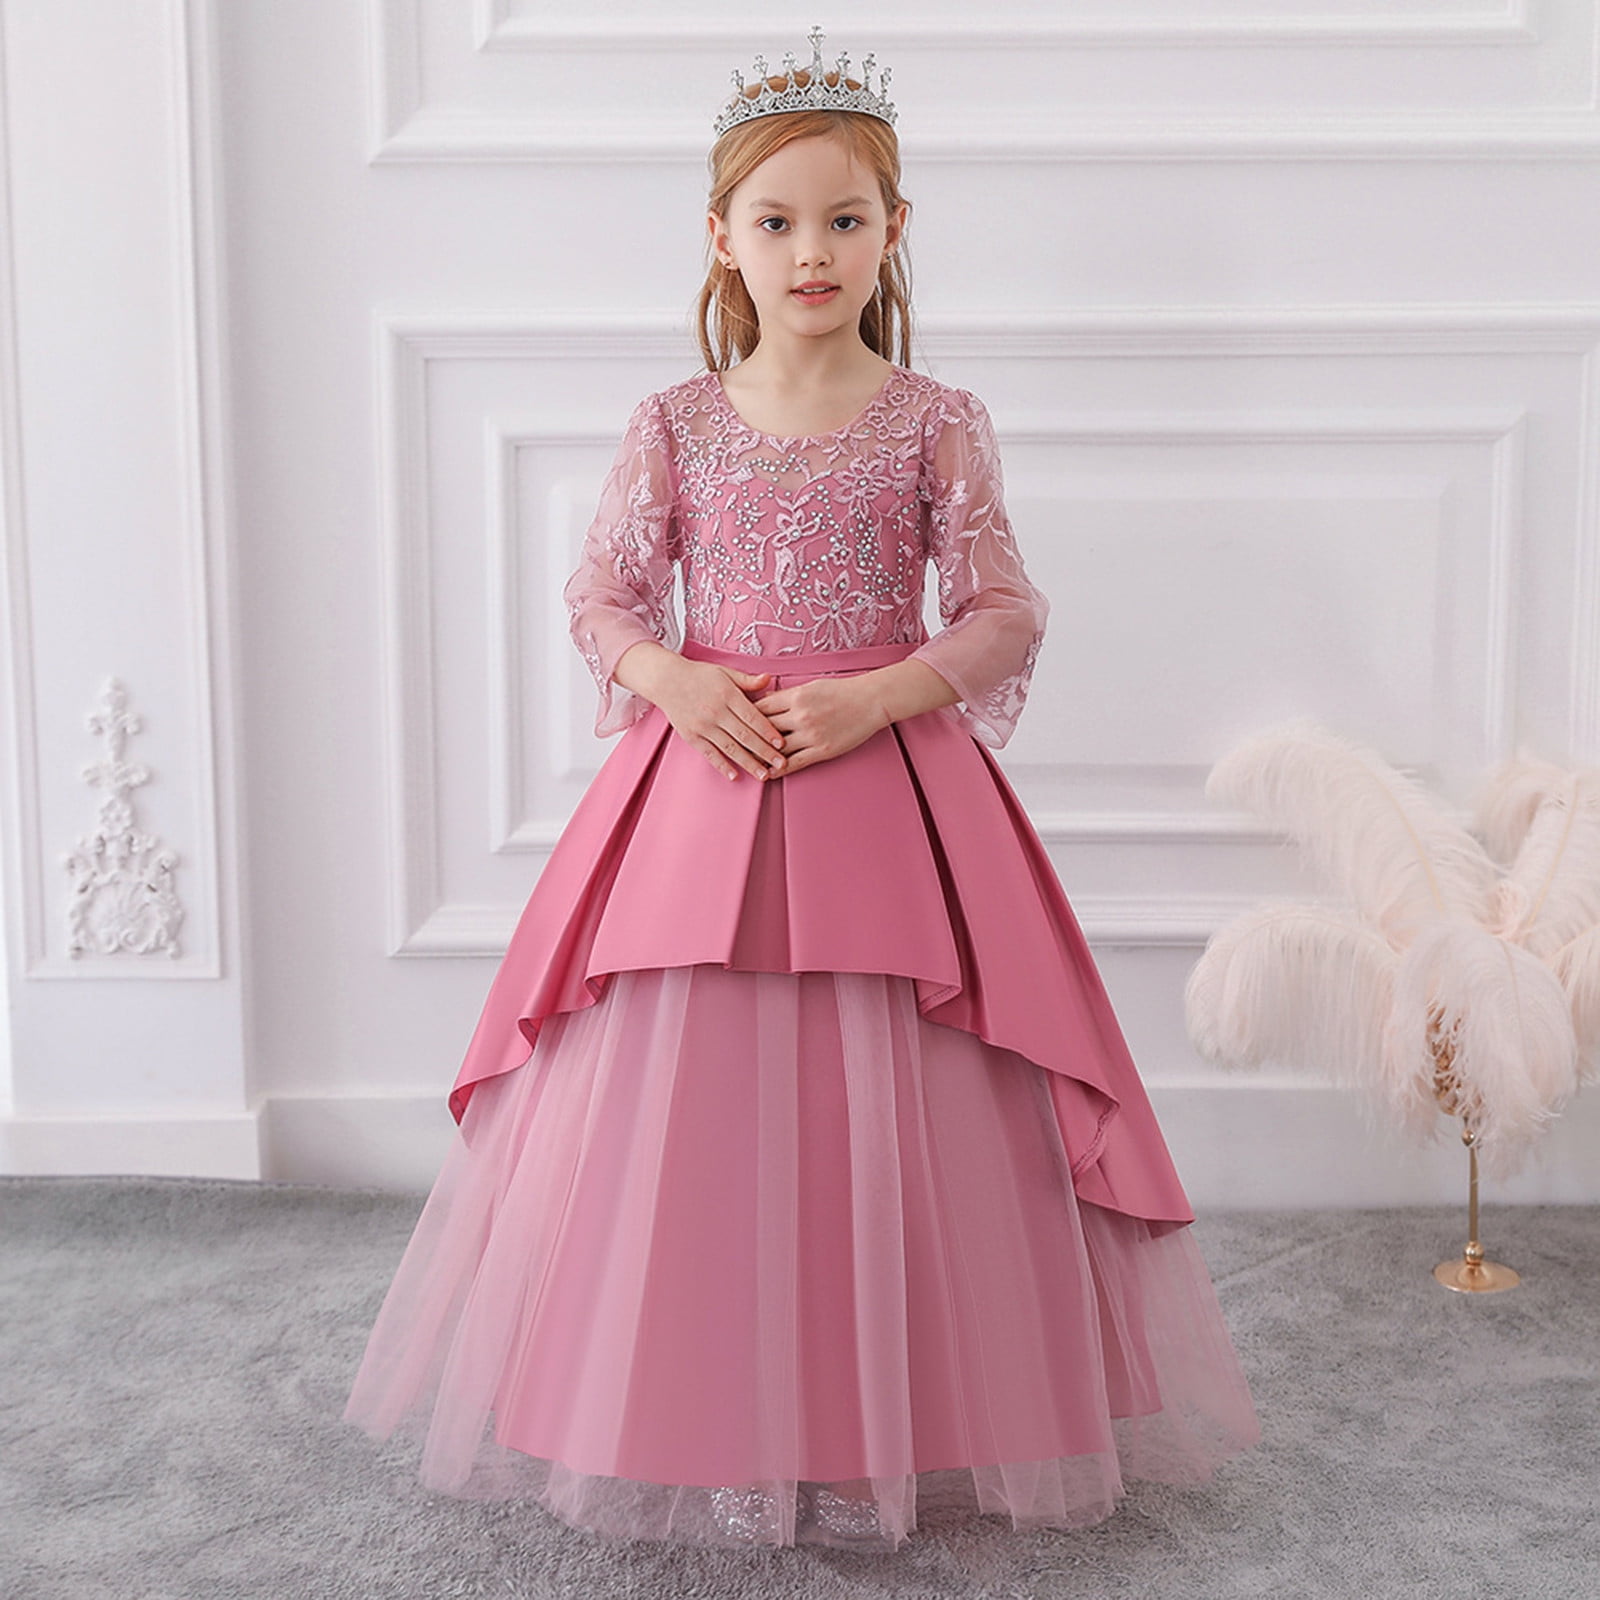 PENTELEI 3409 Kids dress | Girls dresses, Birthday girl dress, Layered  tulle dress